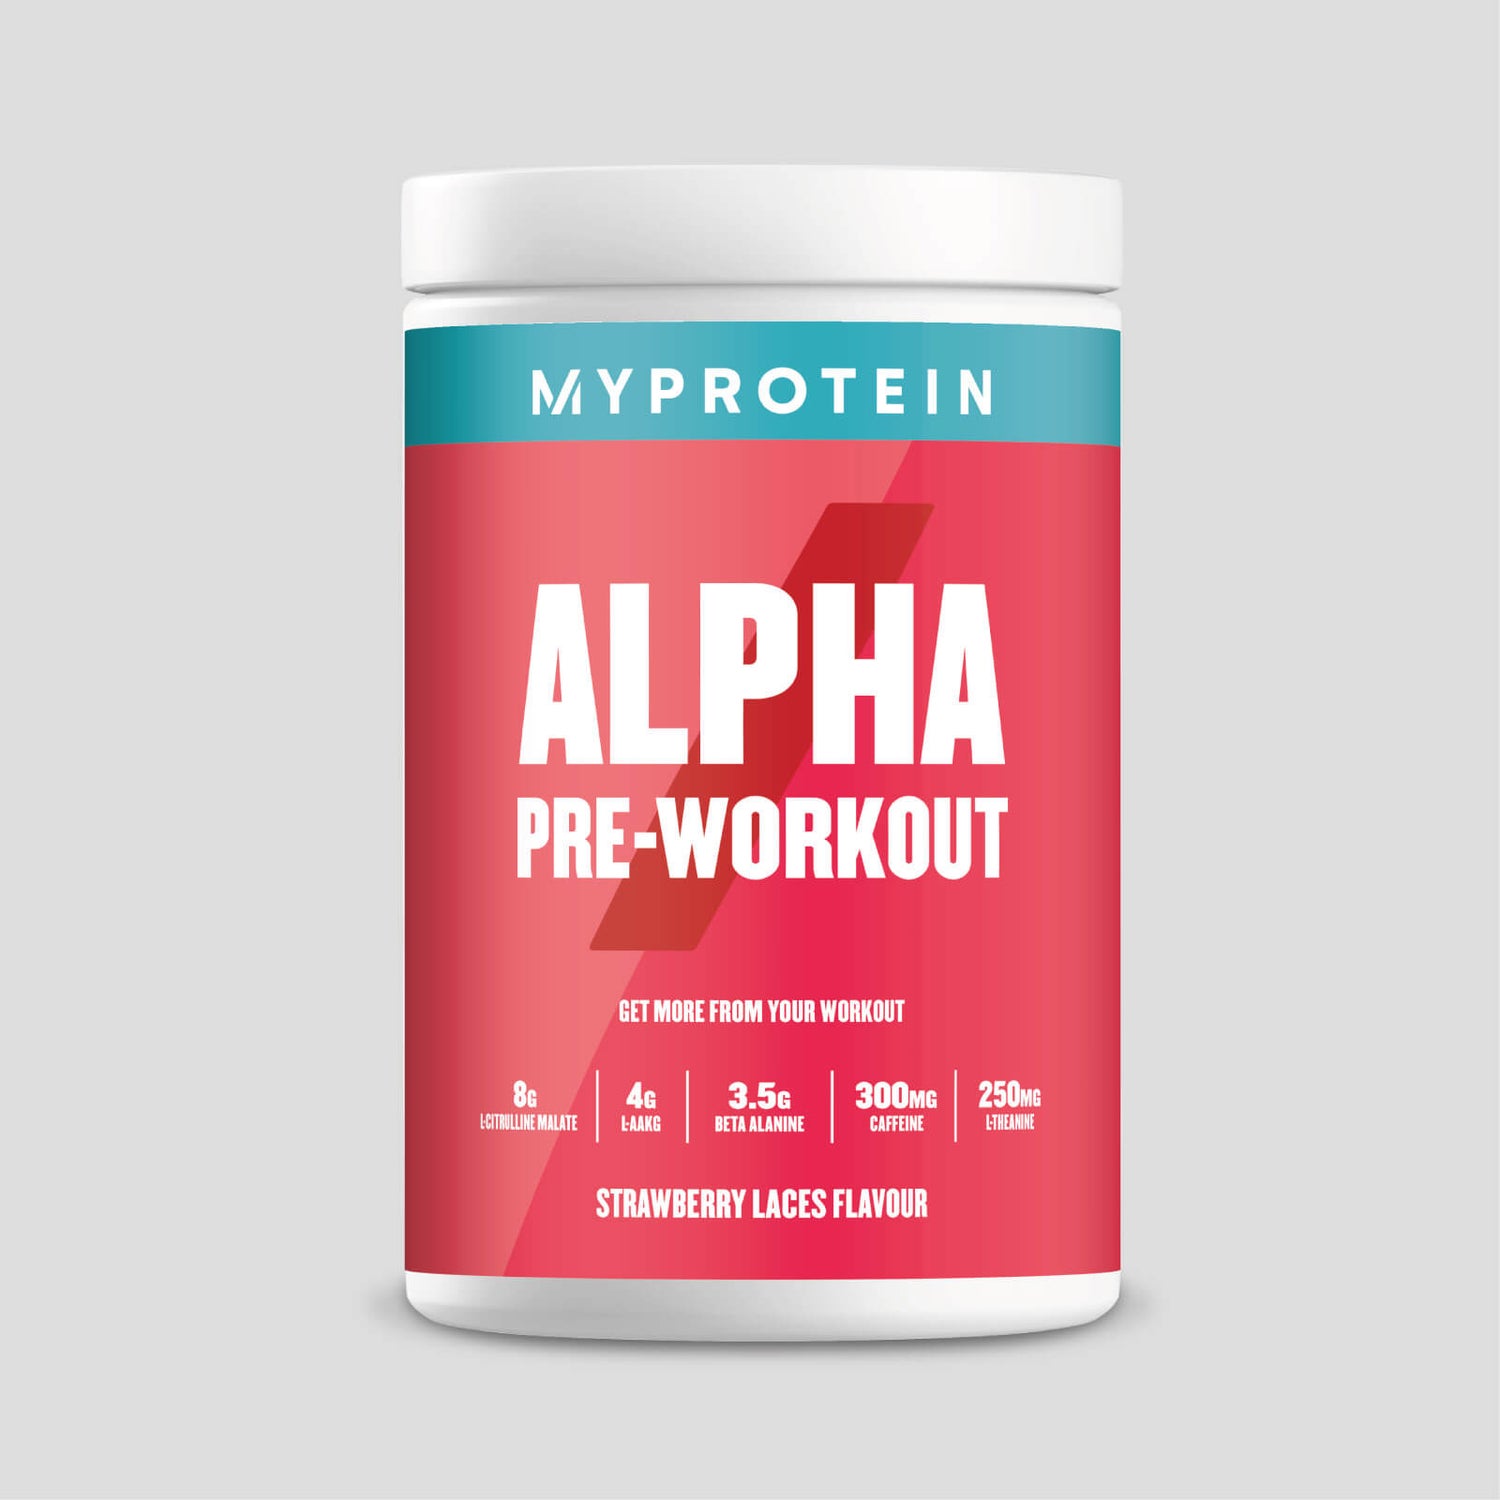 Alpha Pre-Workout - 600g - Strawberry Laces